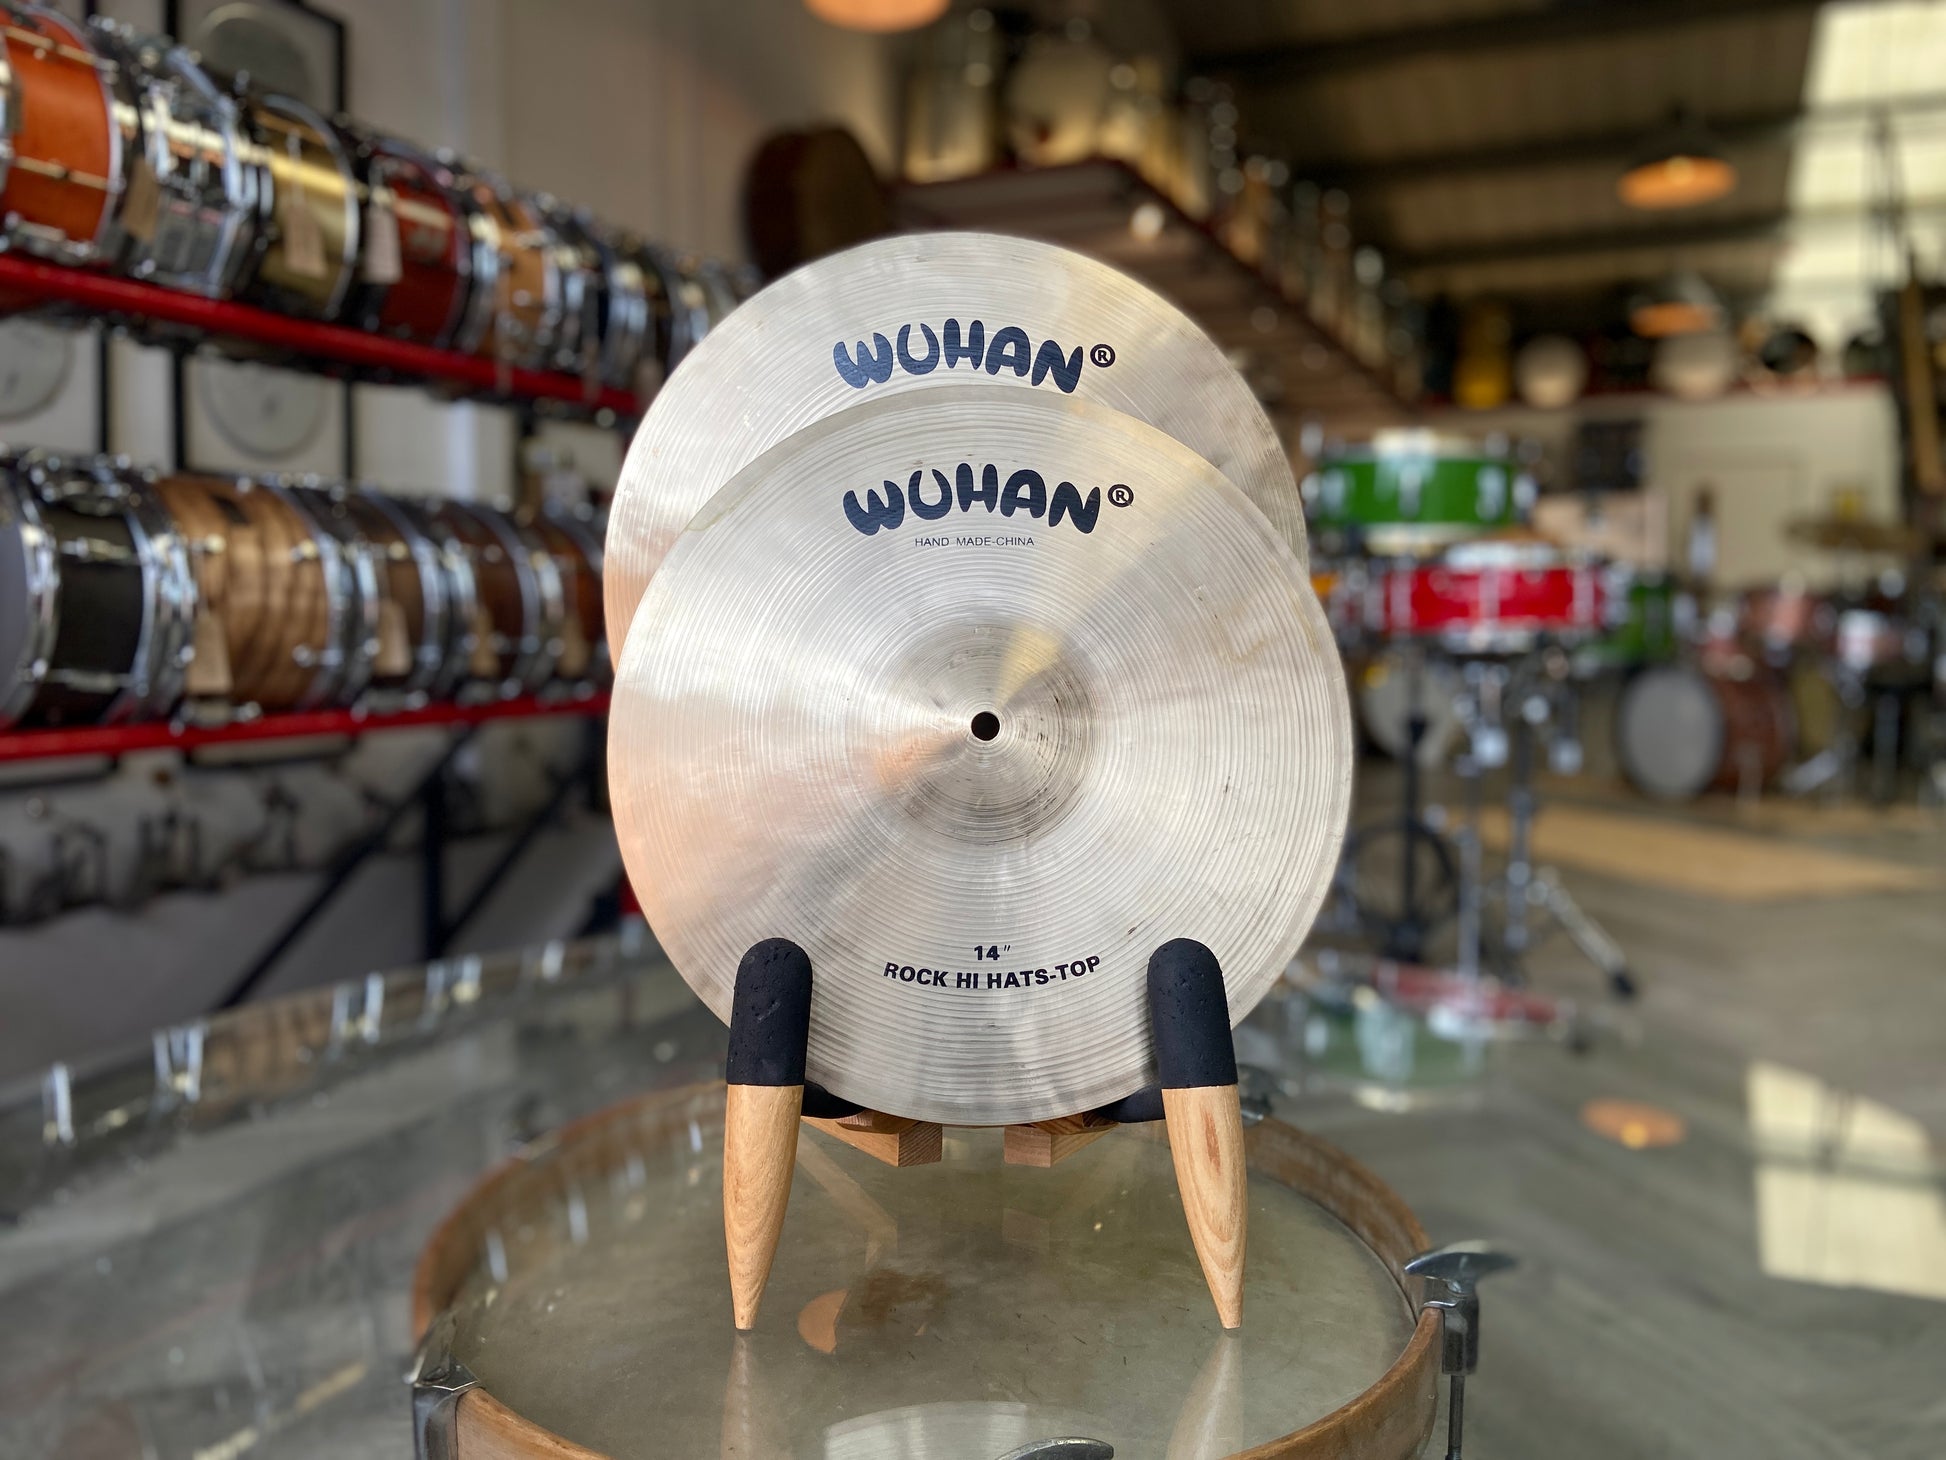 Wuhan 14" Rock Hi-Hat Cymbals